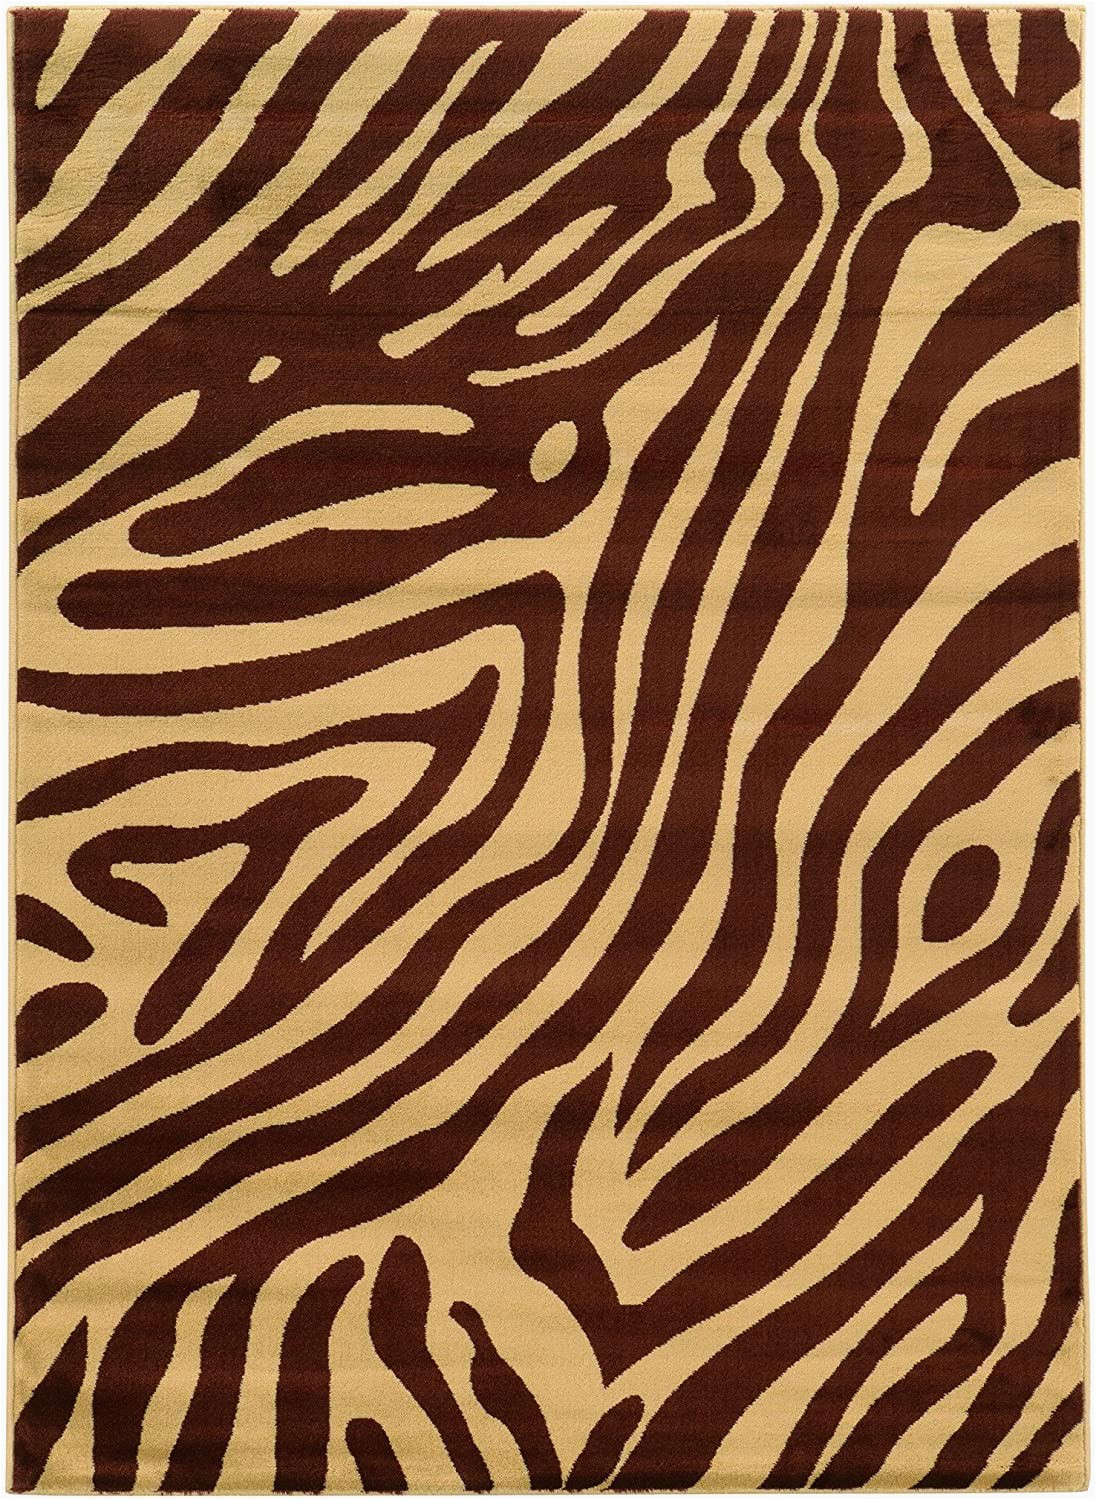 Zebra Print area Rug 8×10 Amazon 5×7 3 Brown Tan Zebra Print area Rug Rectangle